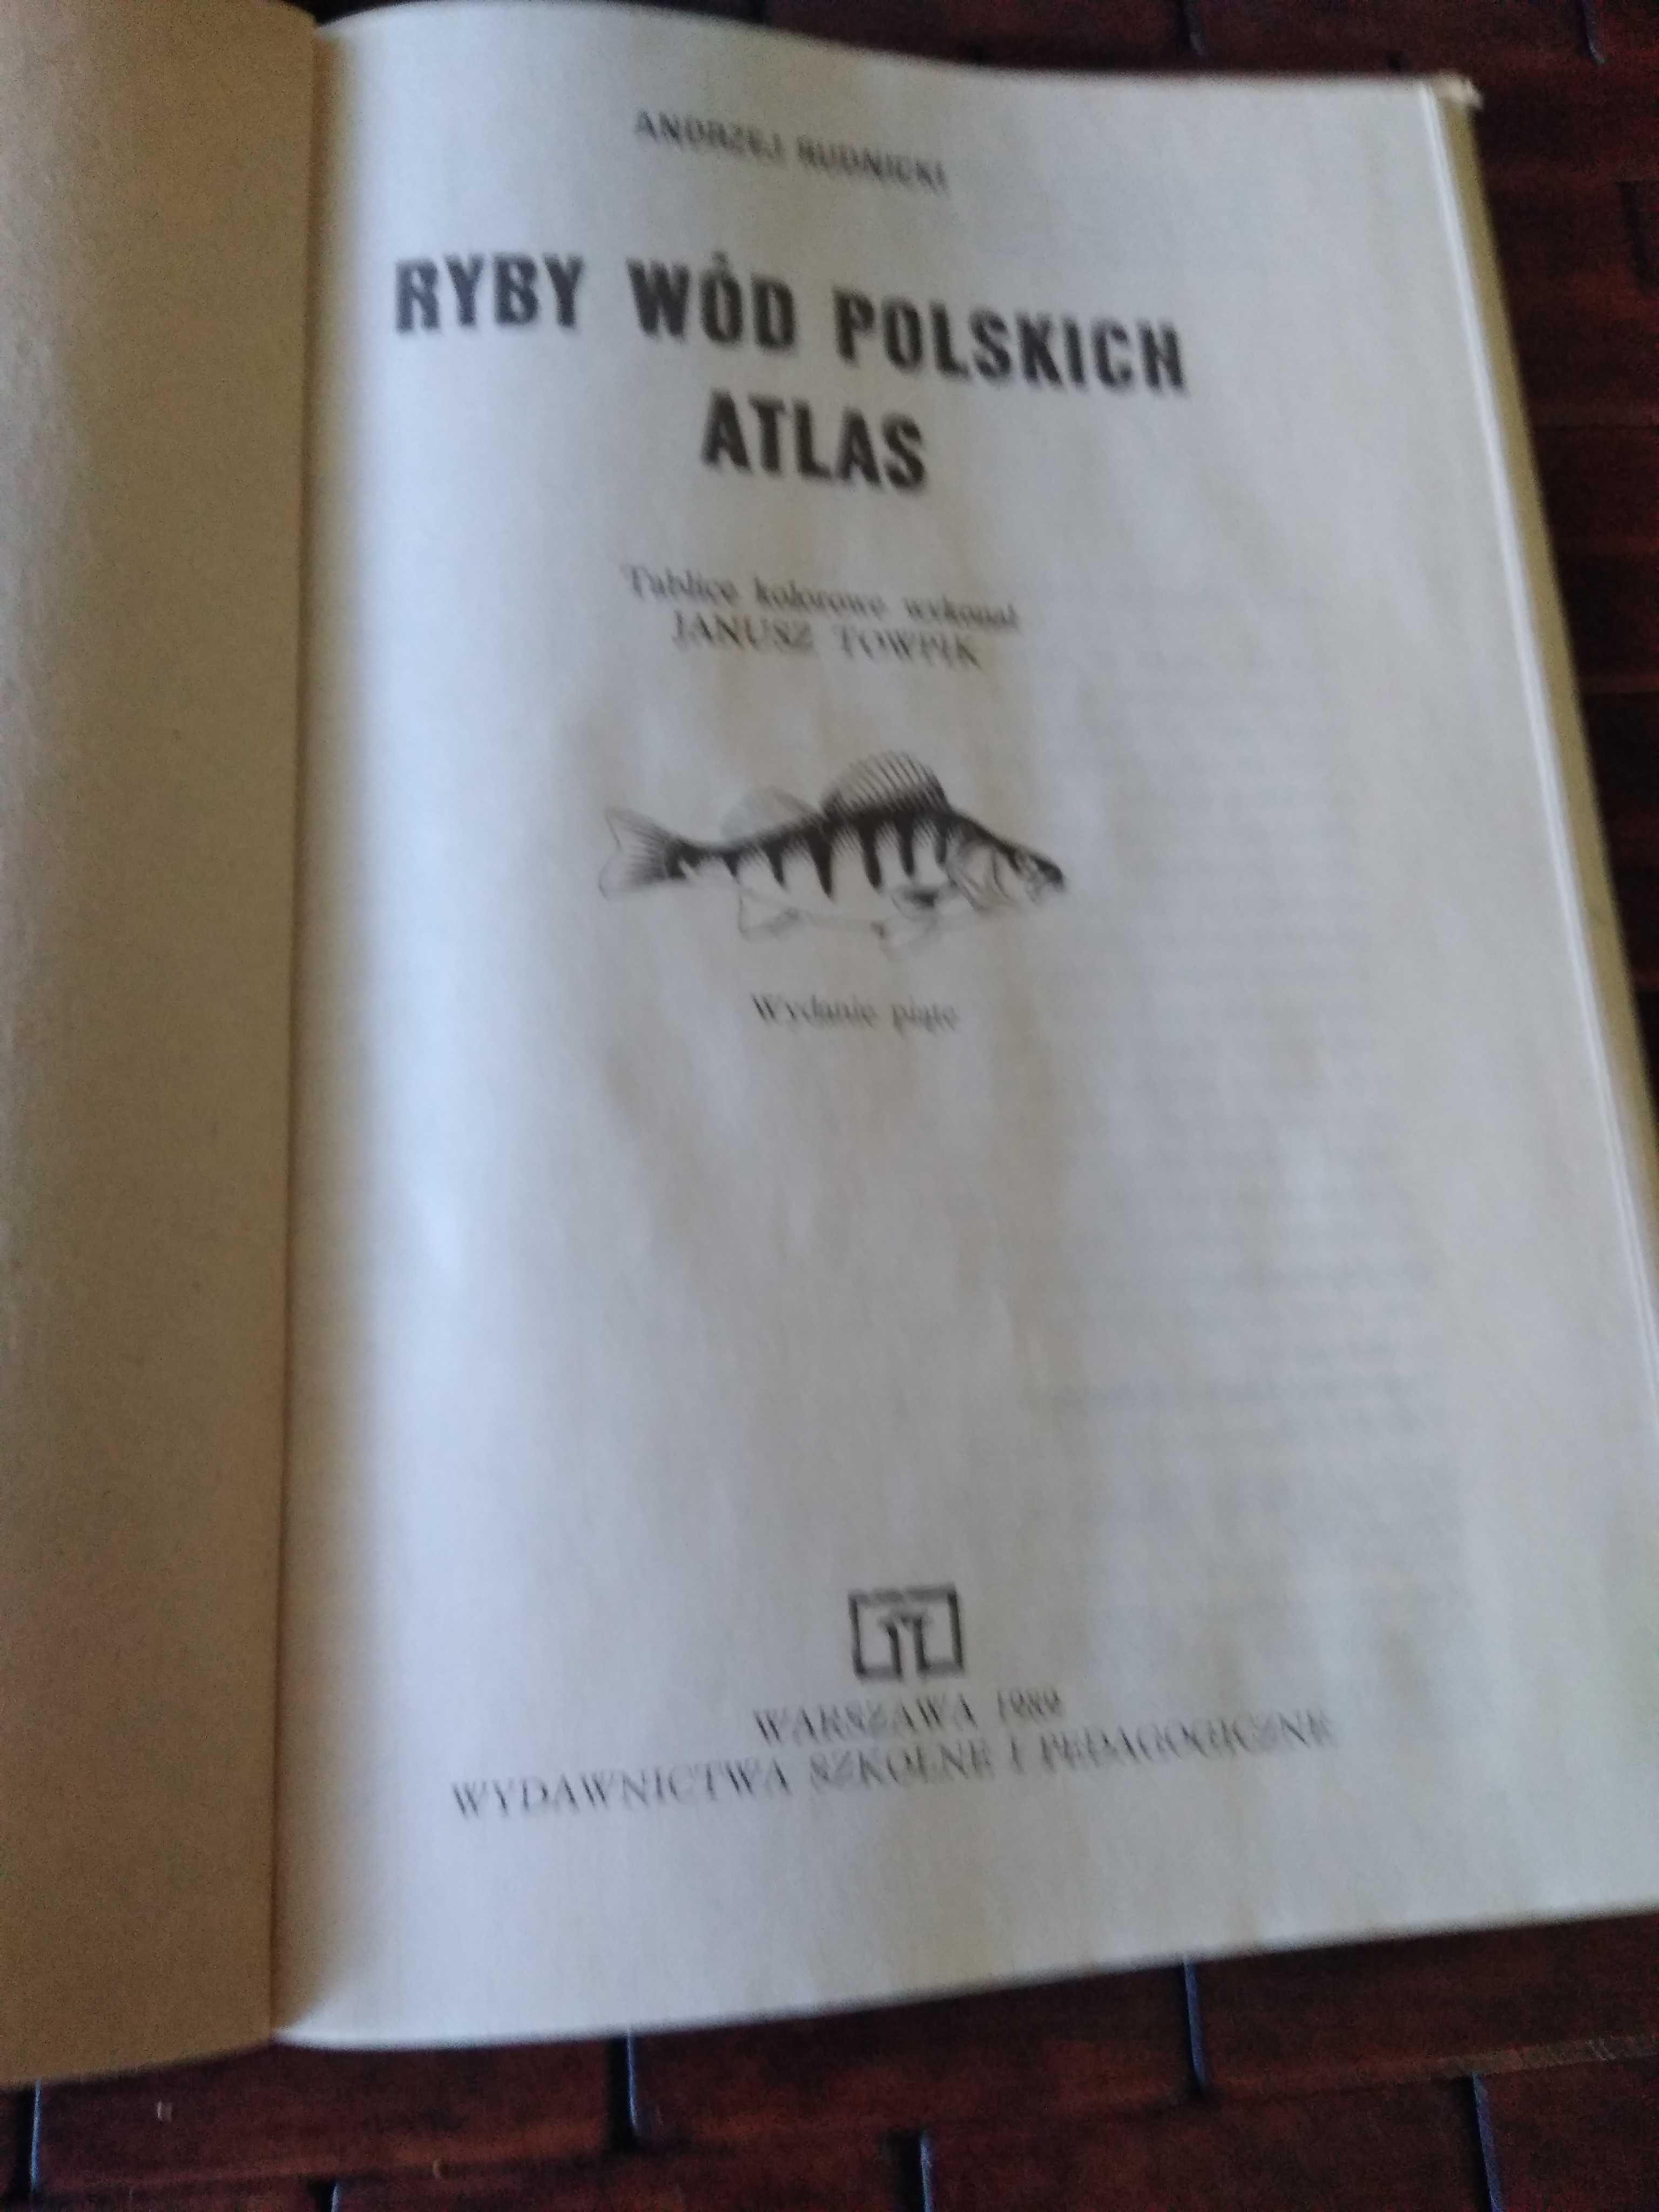 Rudnicki ryby wód polskich atlas